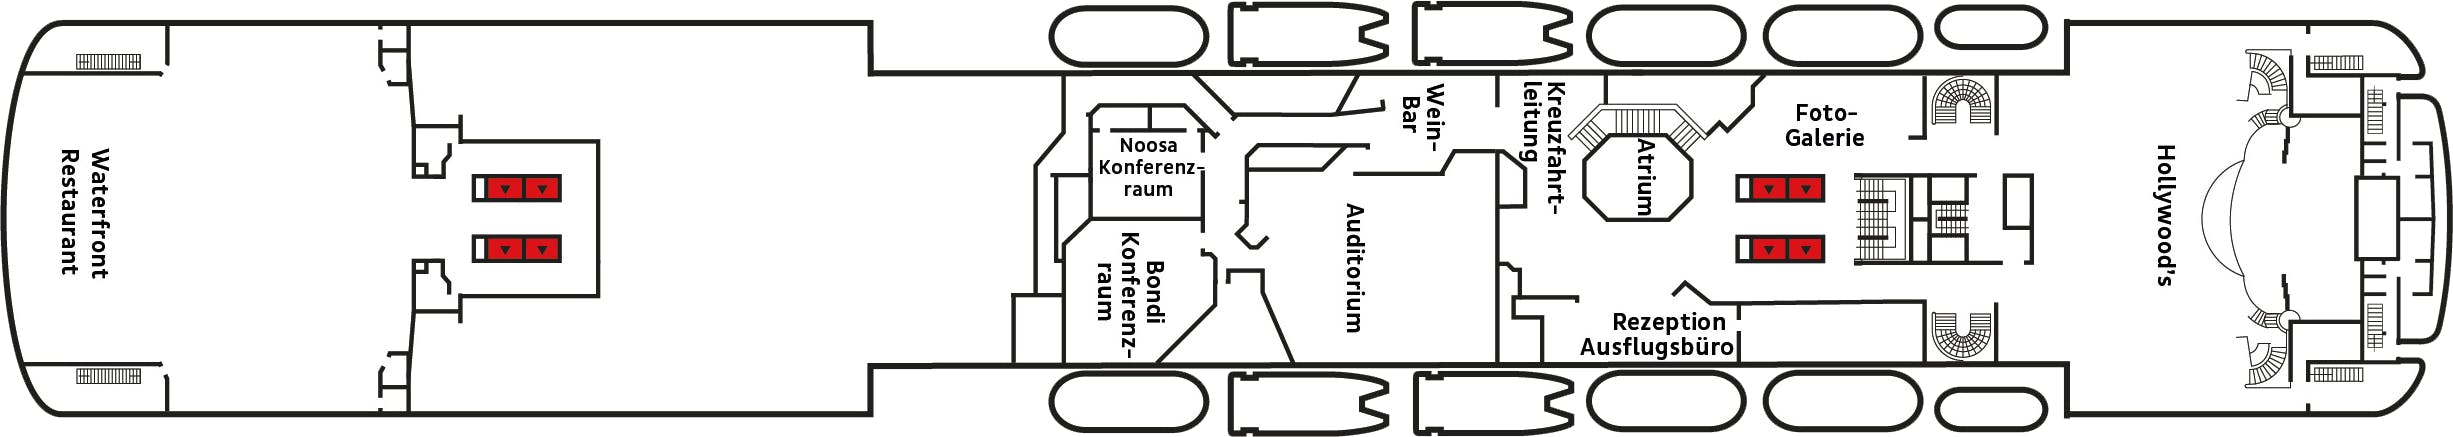 Vasco da Gama - Nicko Cruises Hochsee - Deck 5 (Main Deck)